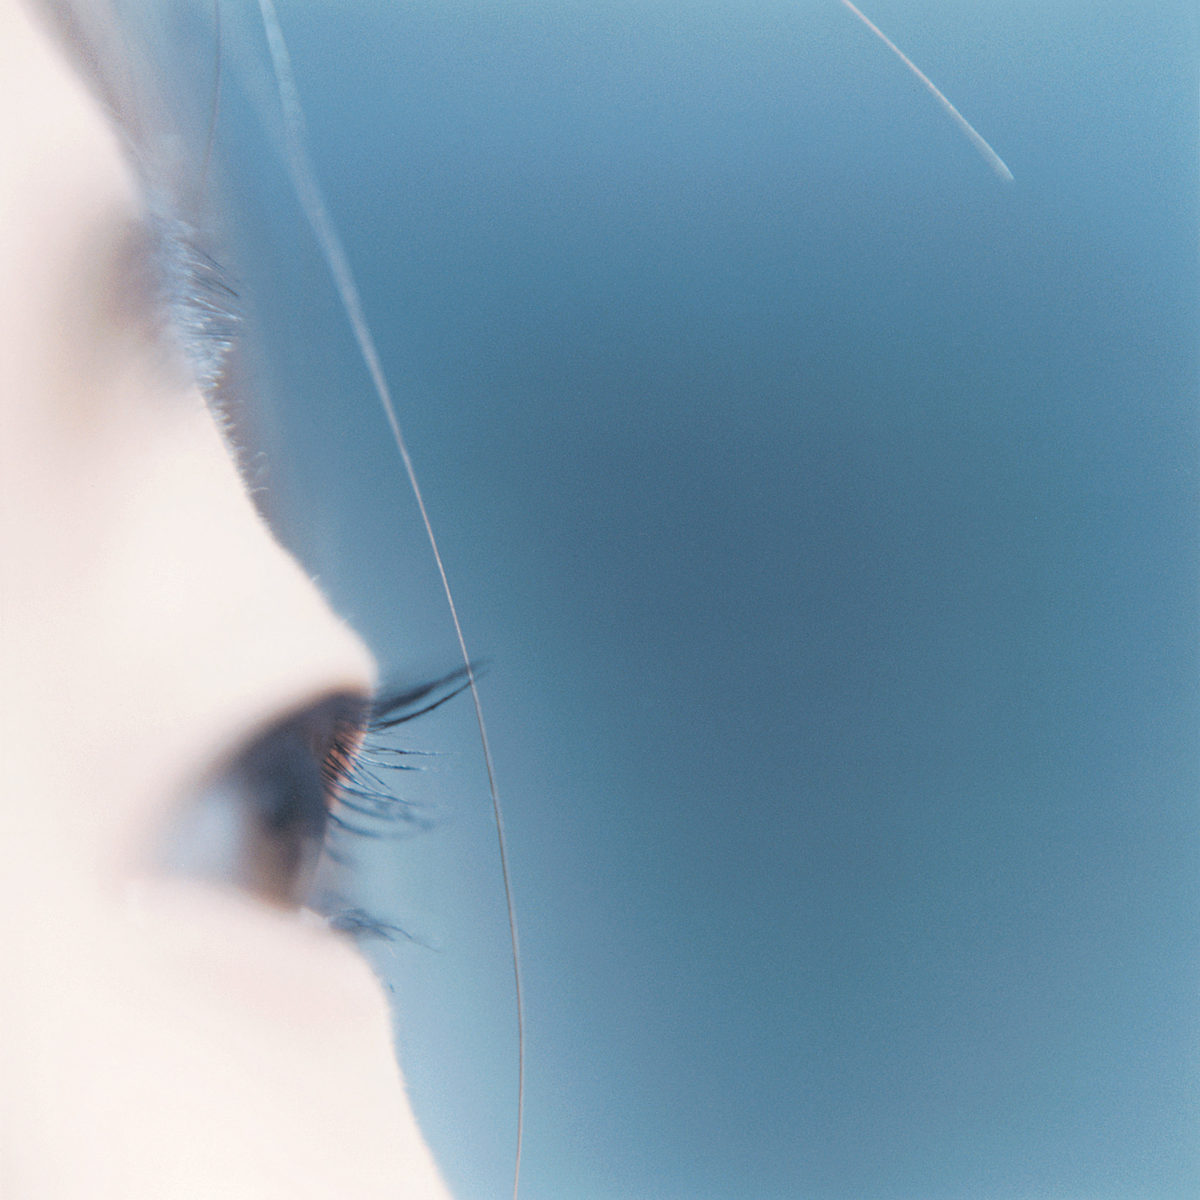 Rinko Kawauchi — The Eyes, The Ears